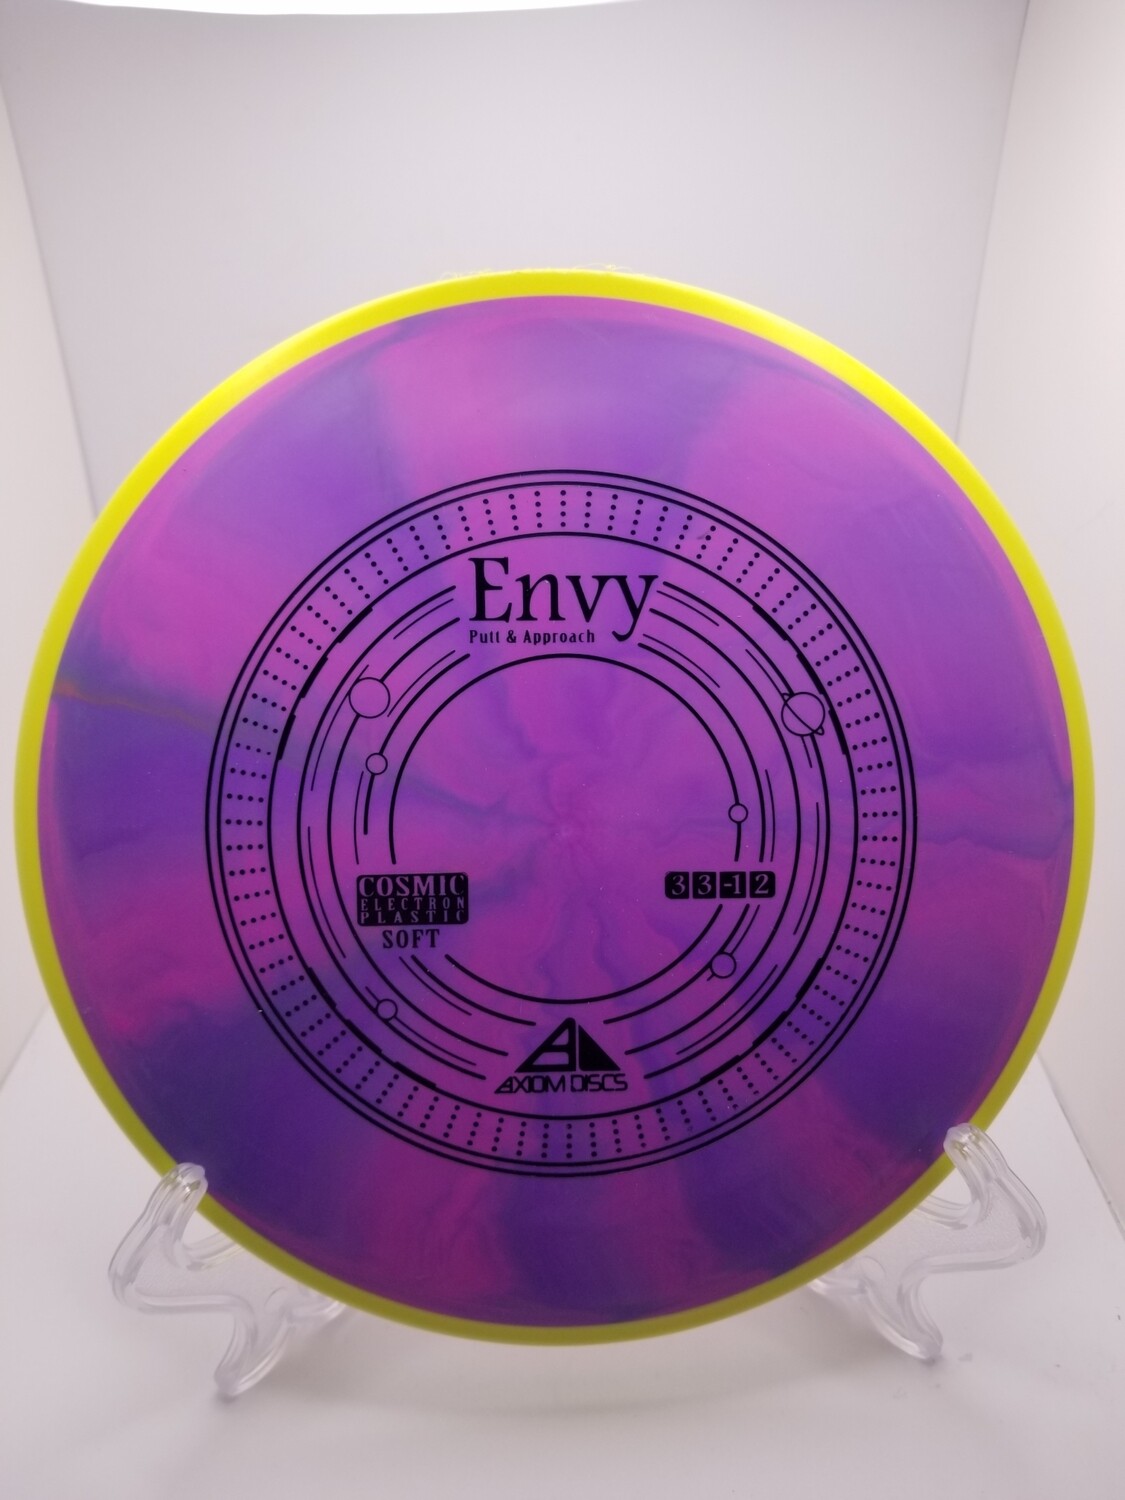 Axiom Discs Envy Purple Swirl with Yellow Rim Cosmic Electron Plastic Soft 173g